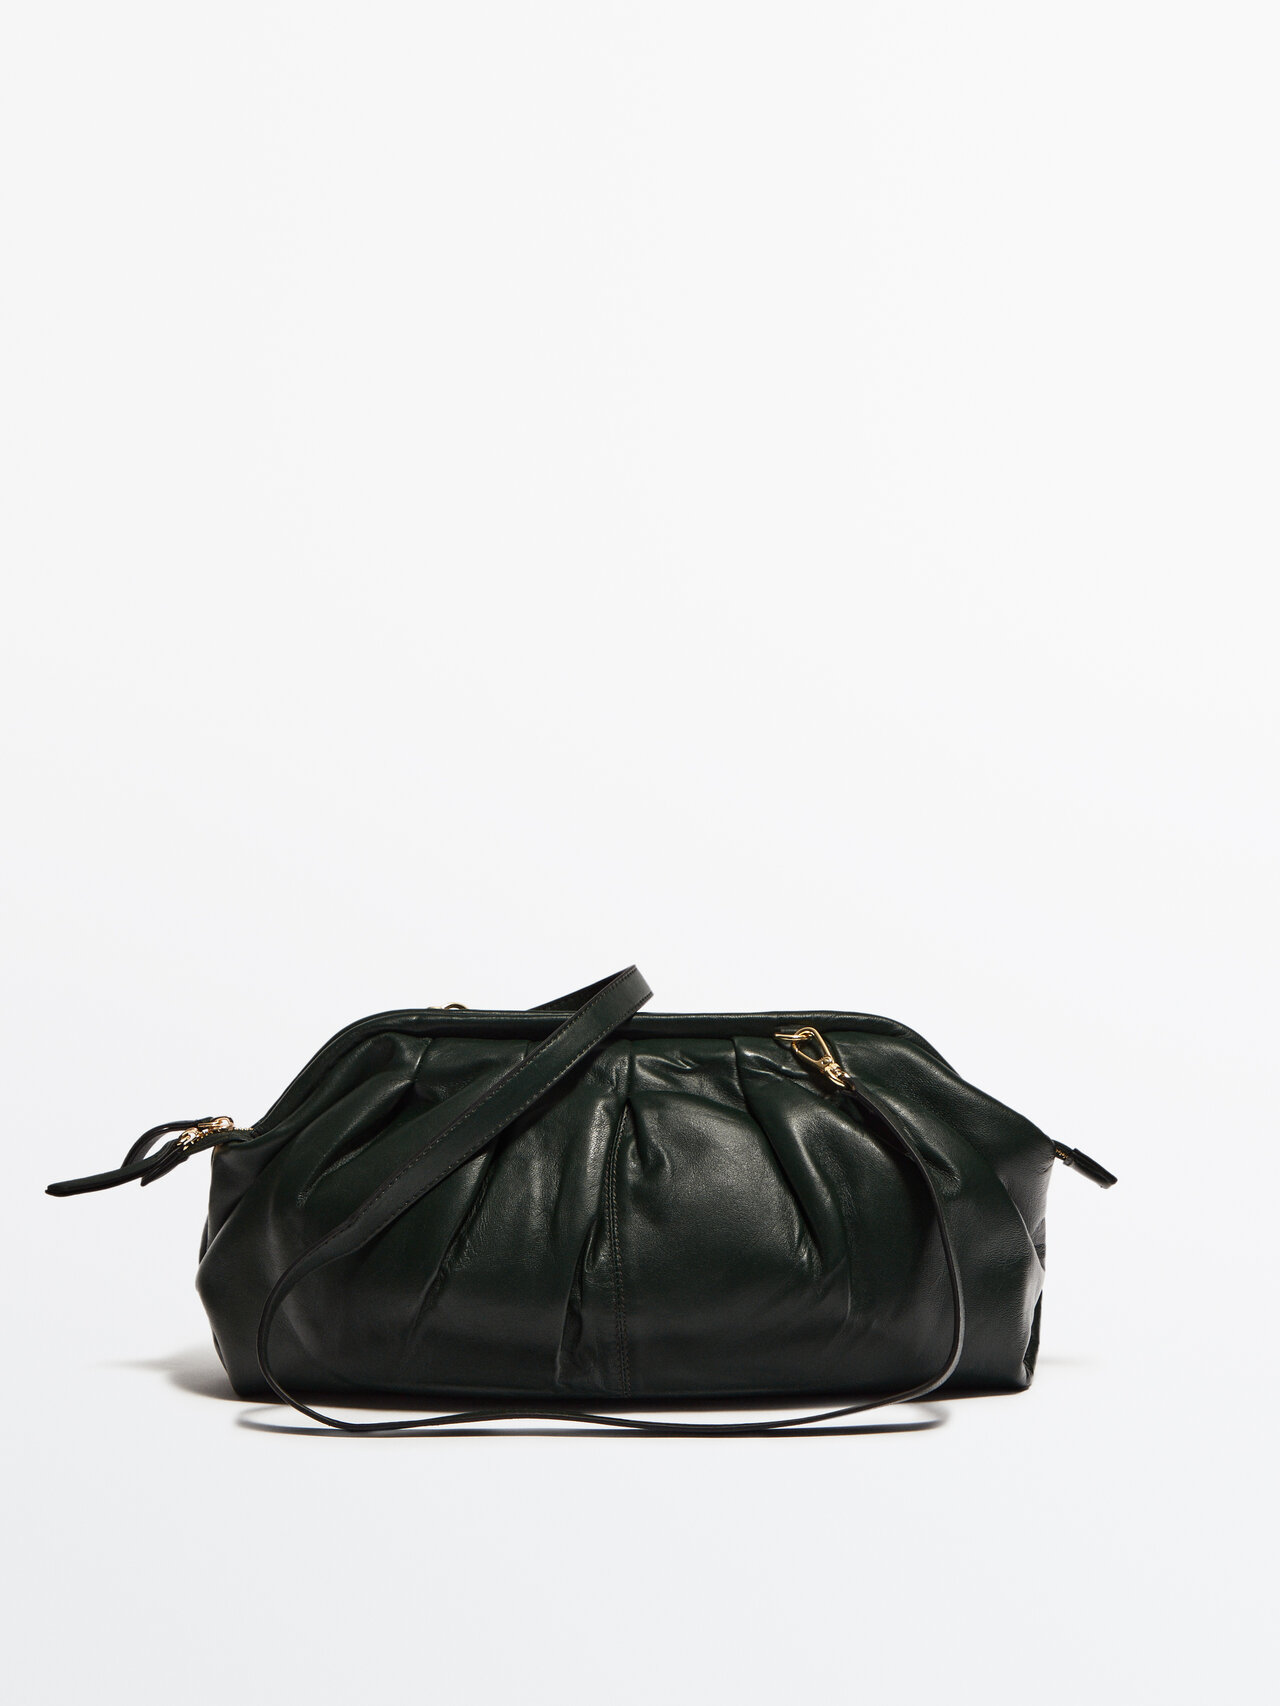 Massimo Dutti Gathered Xl Leather Bag - Studio In Brown